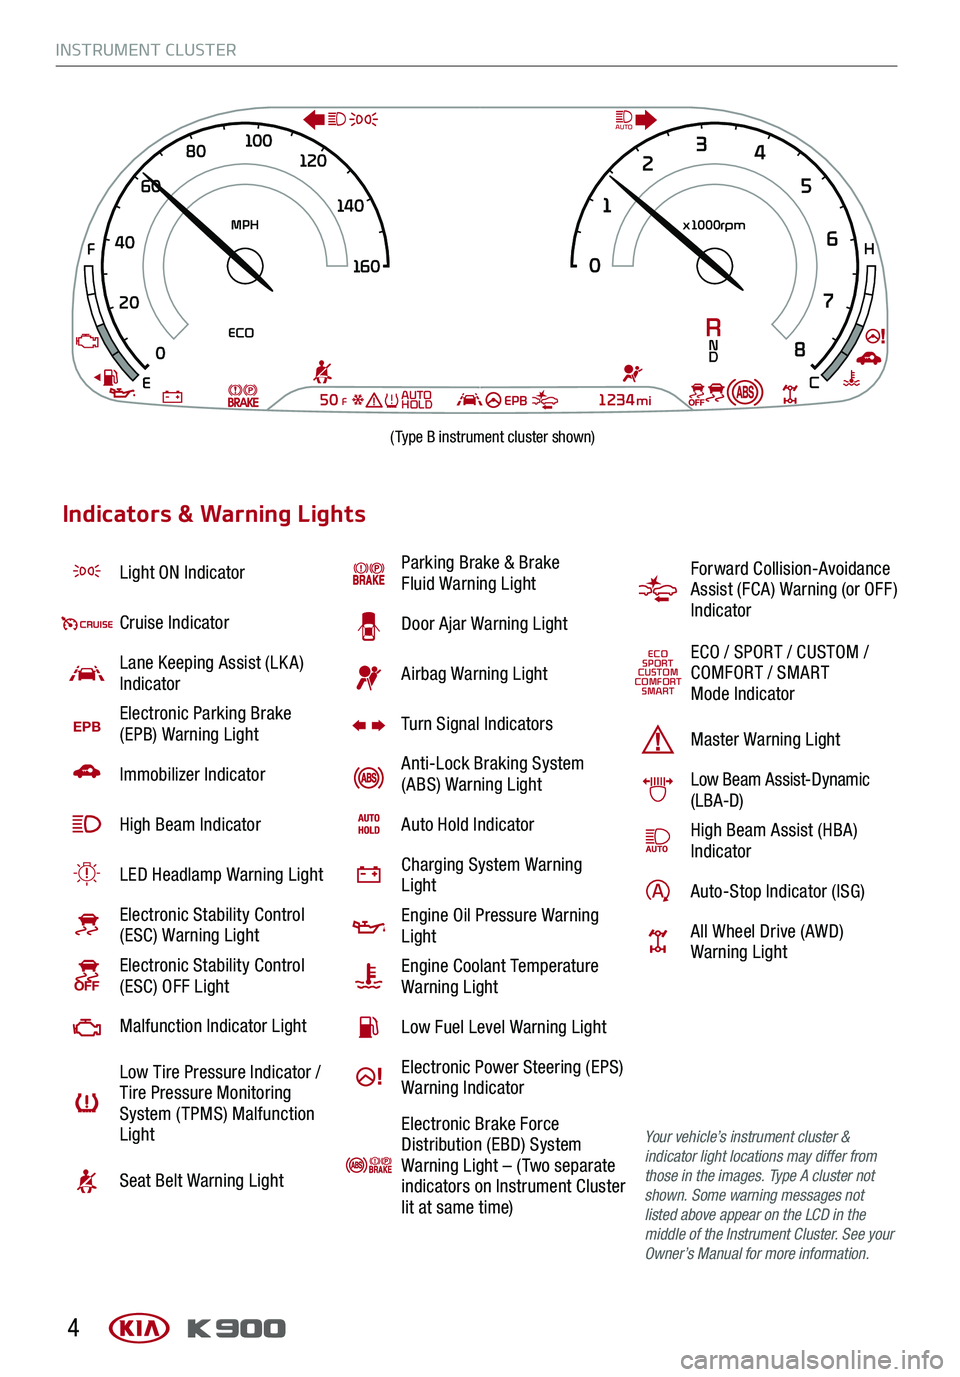 KIA K900 2020  Features and Functions Guide INSTRUMENT CLUSTER
4
Light ON Indicator 
Cruise Indicator
Lane Keeping Assist (LK A) Indicator
EPBElectronic Parking Brake  (EPB) Warning Light
Immobilizer Indicator
High Beam Indicator
LED Headlamp W